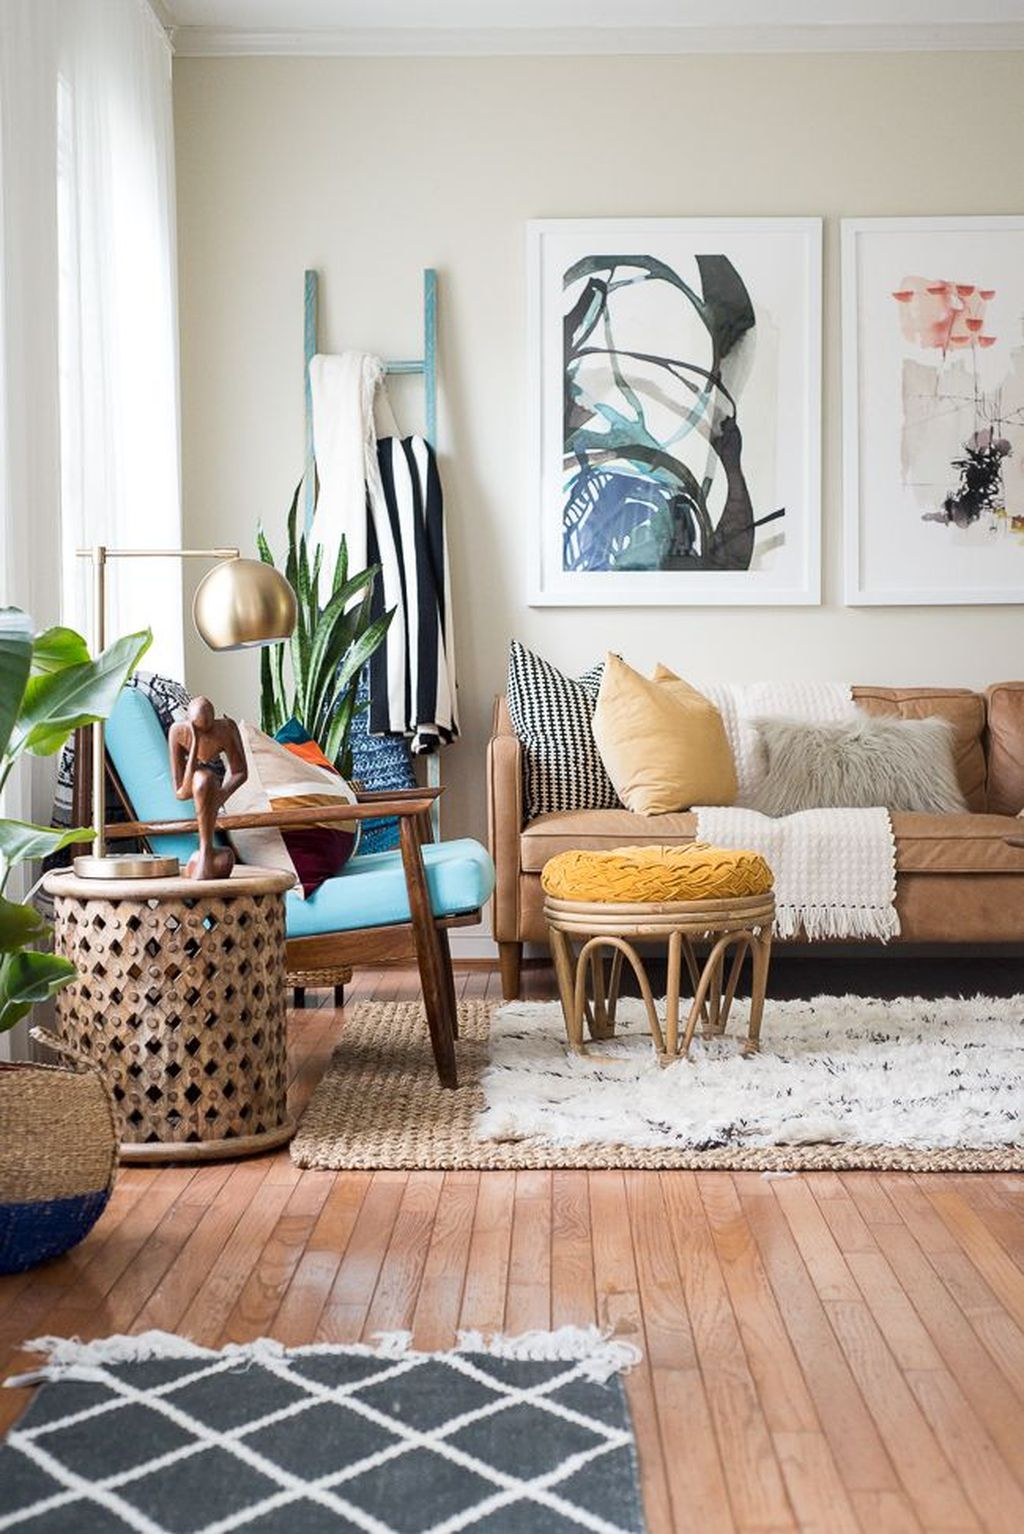 Inspiring Rustic Livingroom Decorations Home08